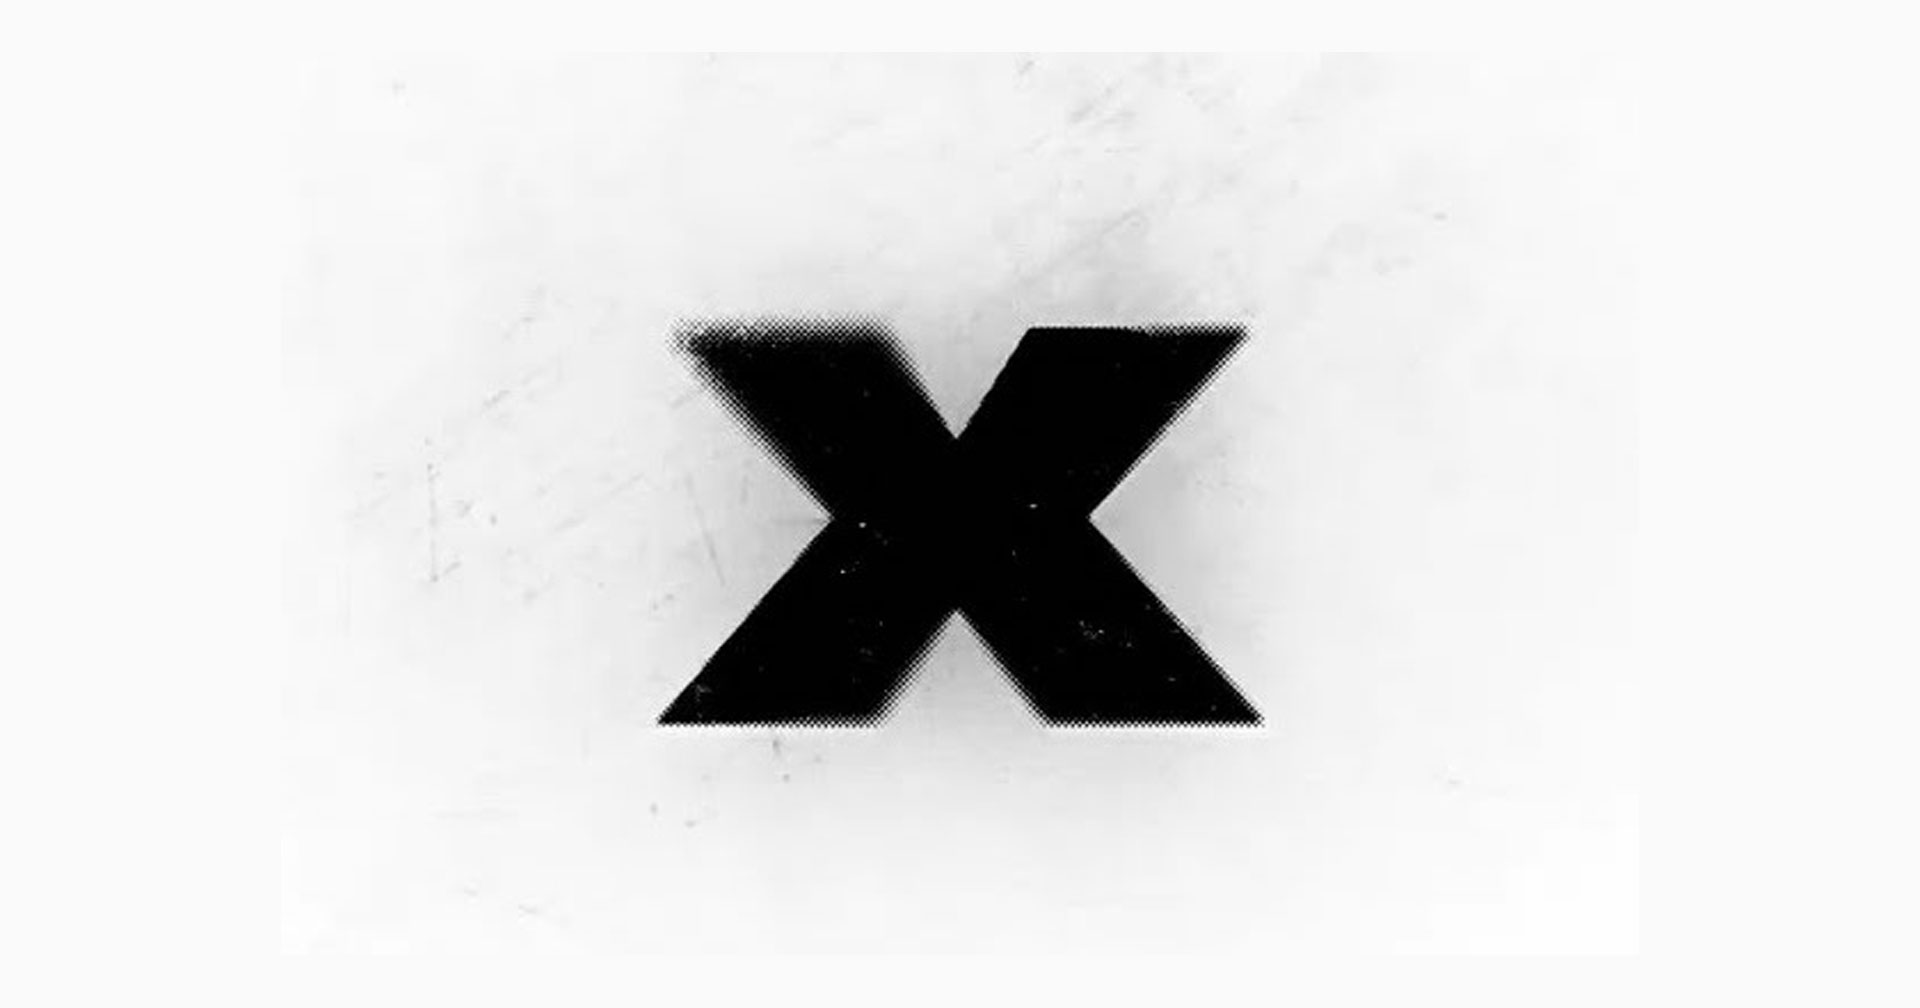 RED ปล่อย Teaser เตรียมเปิดตัวกล้อง Cinema รุ่นใหม่ ‘KOMODO-X’ 16 พฤษภาคม